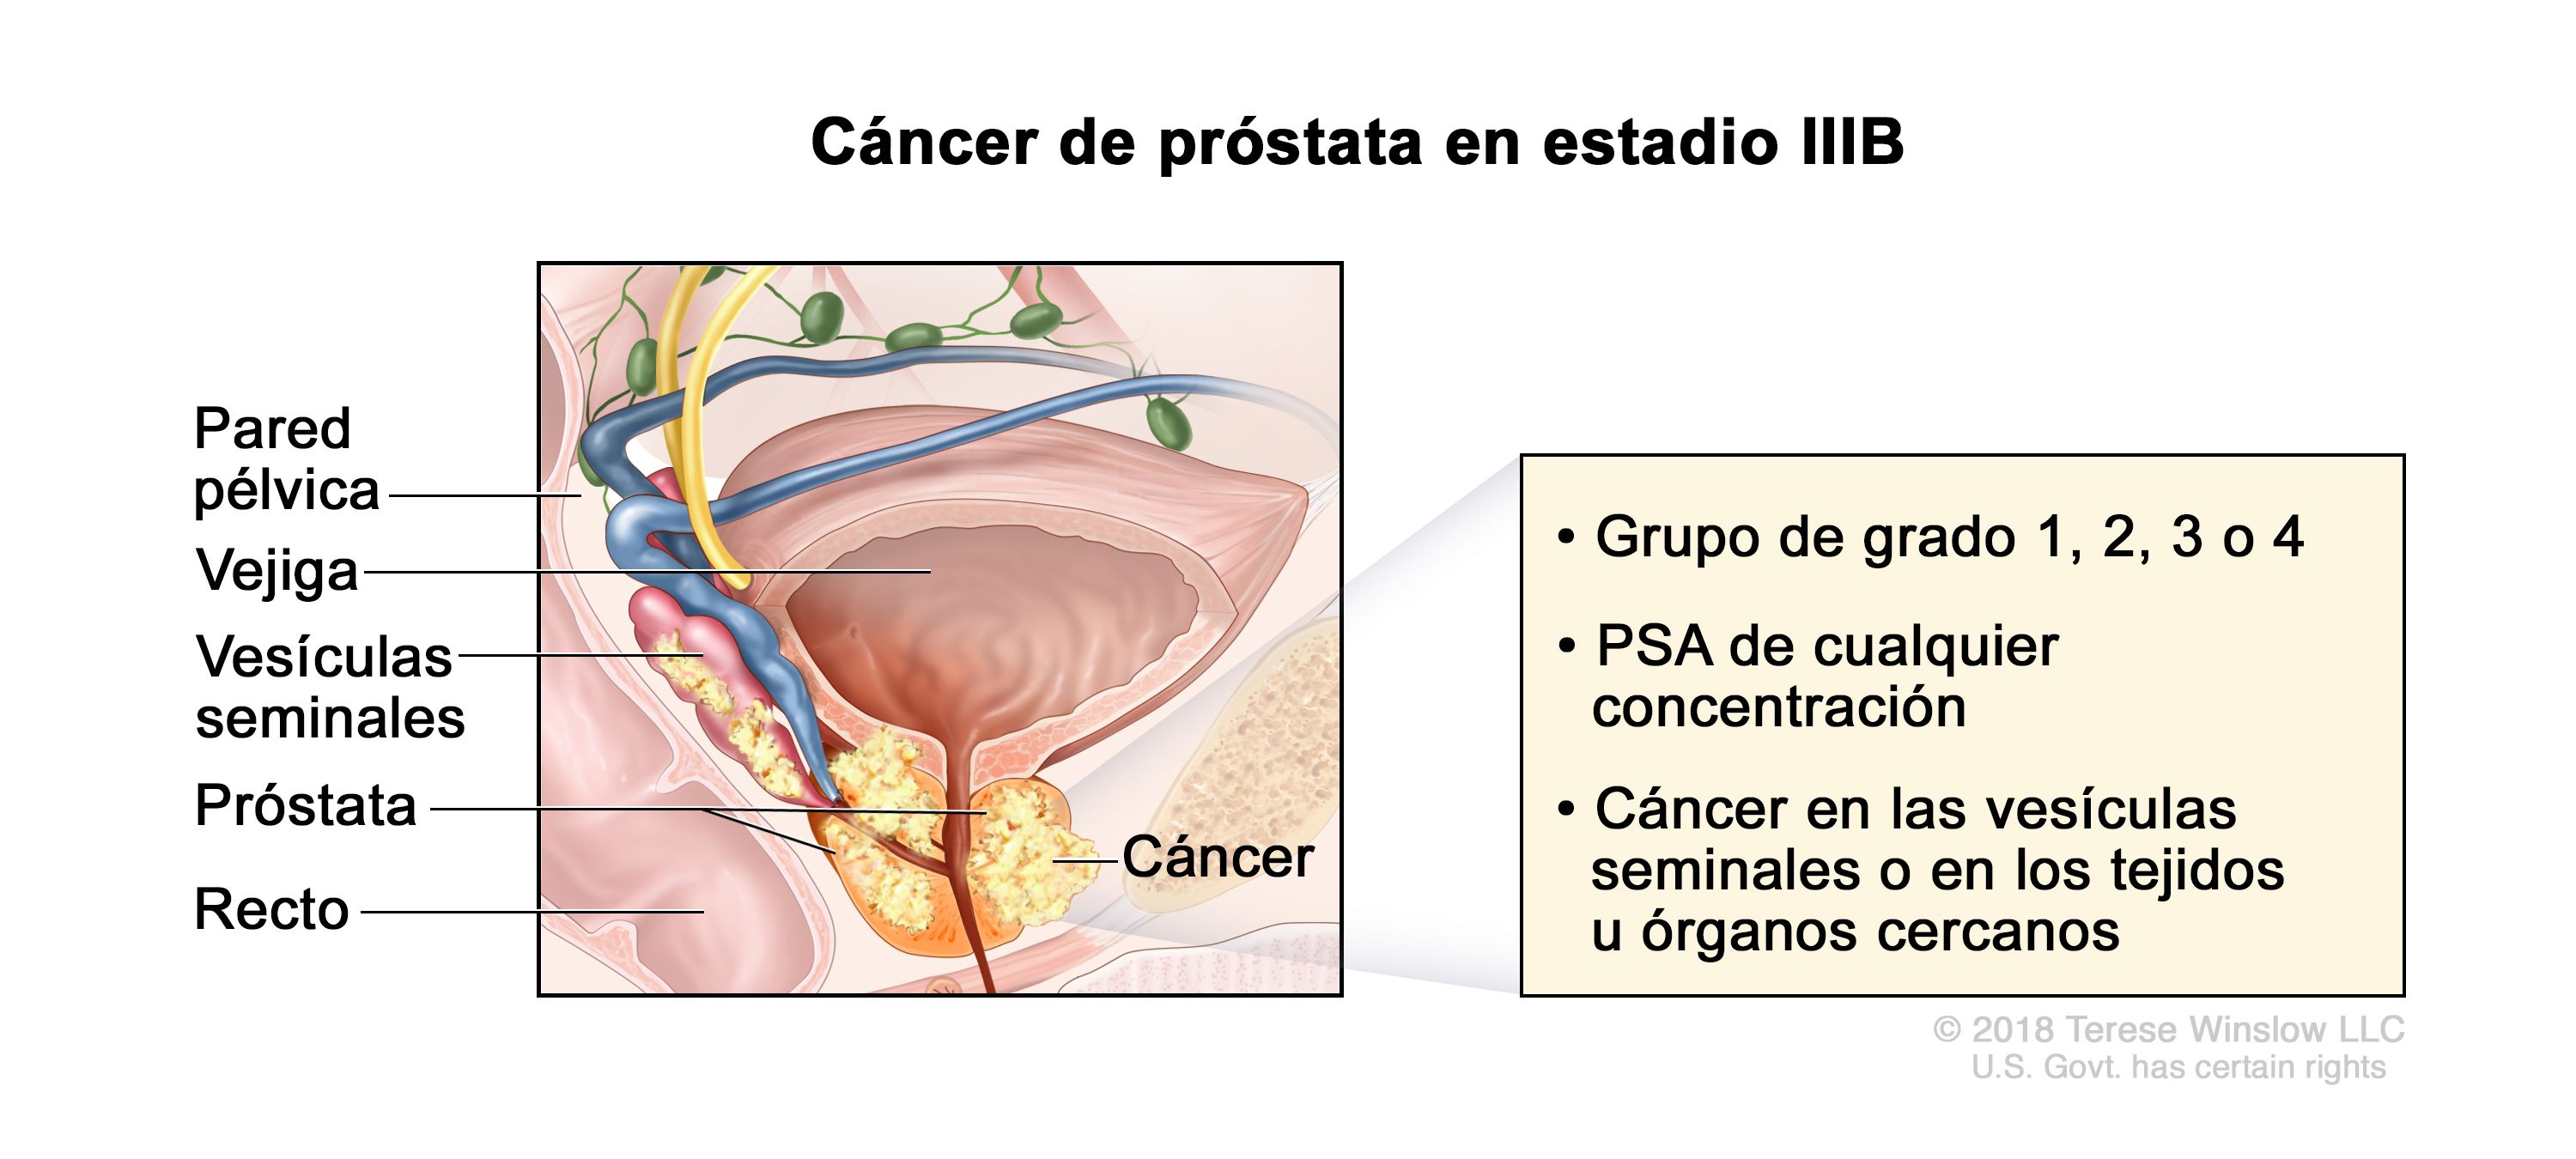 cancer de prostata estadio 2)